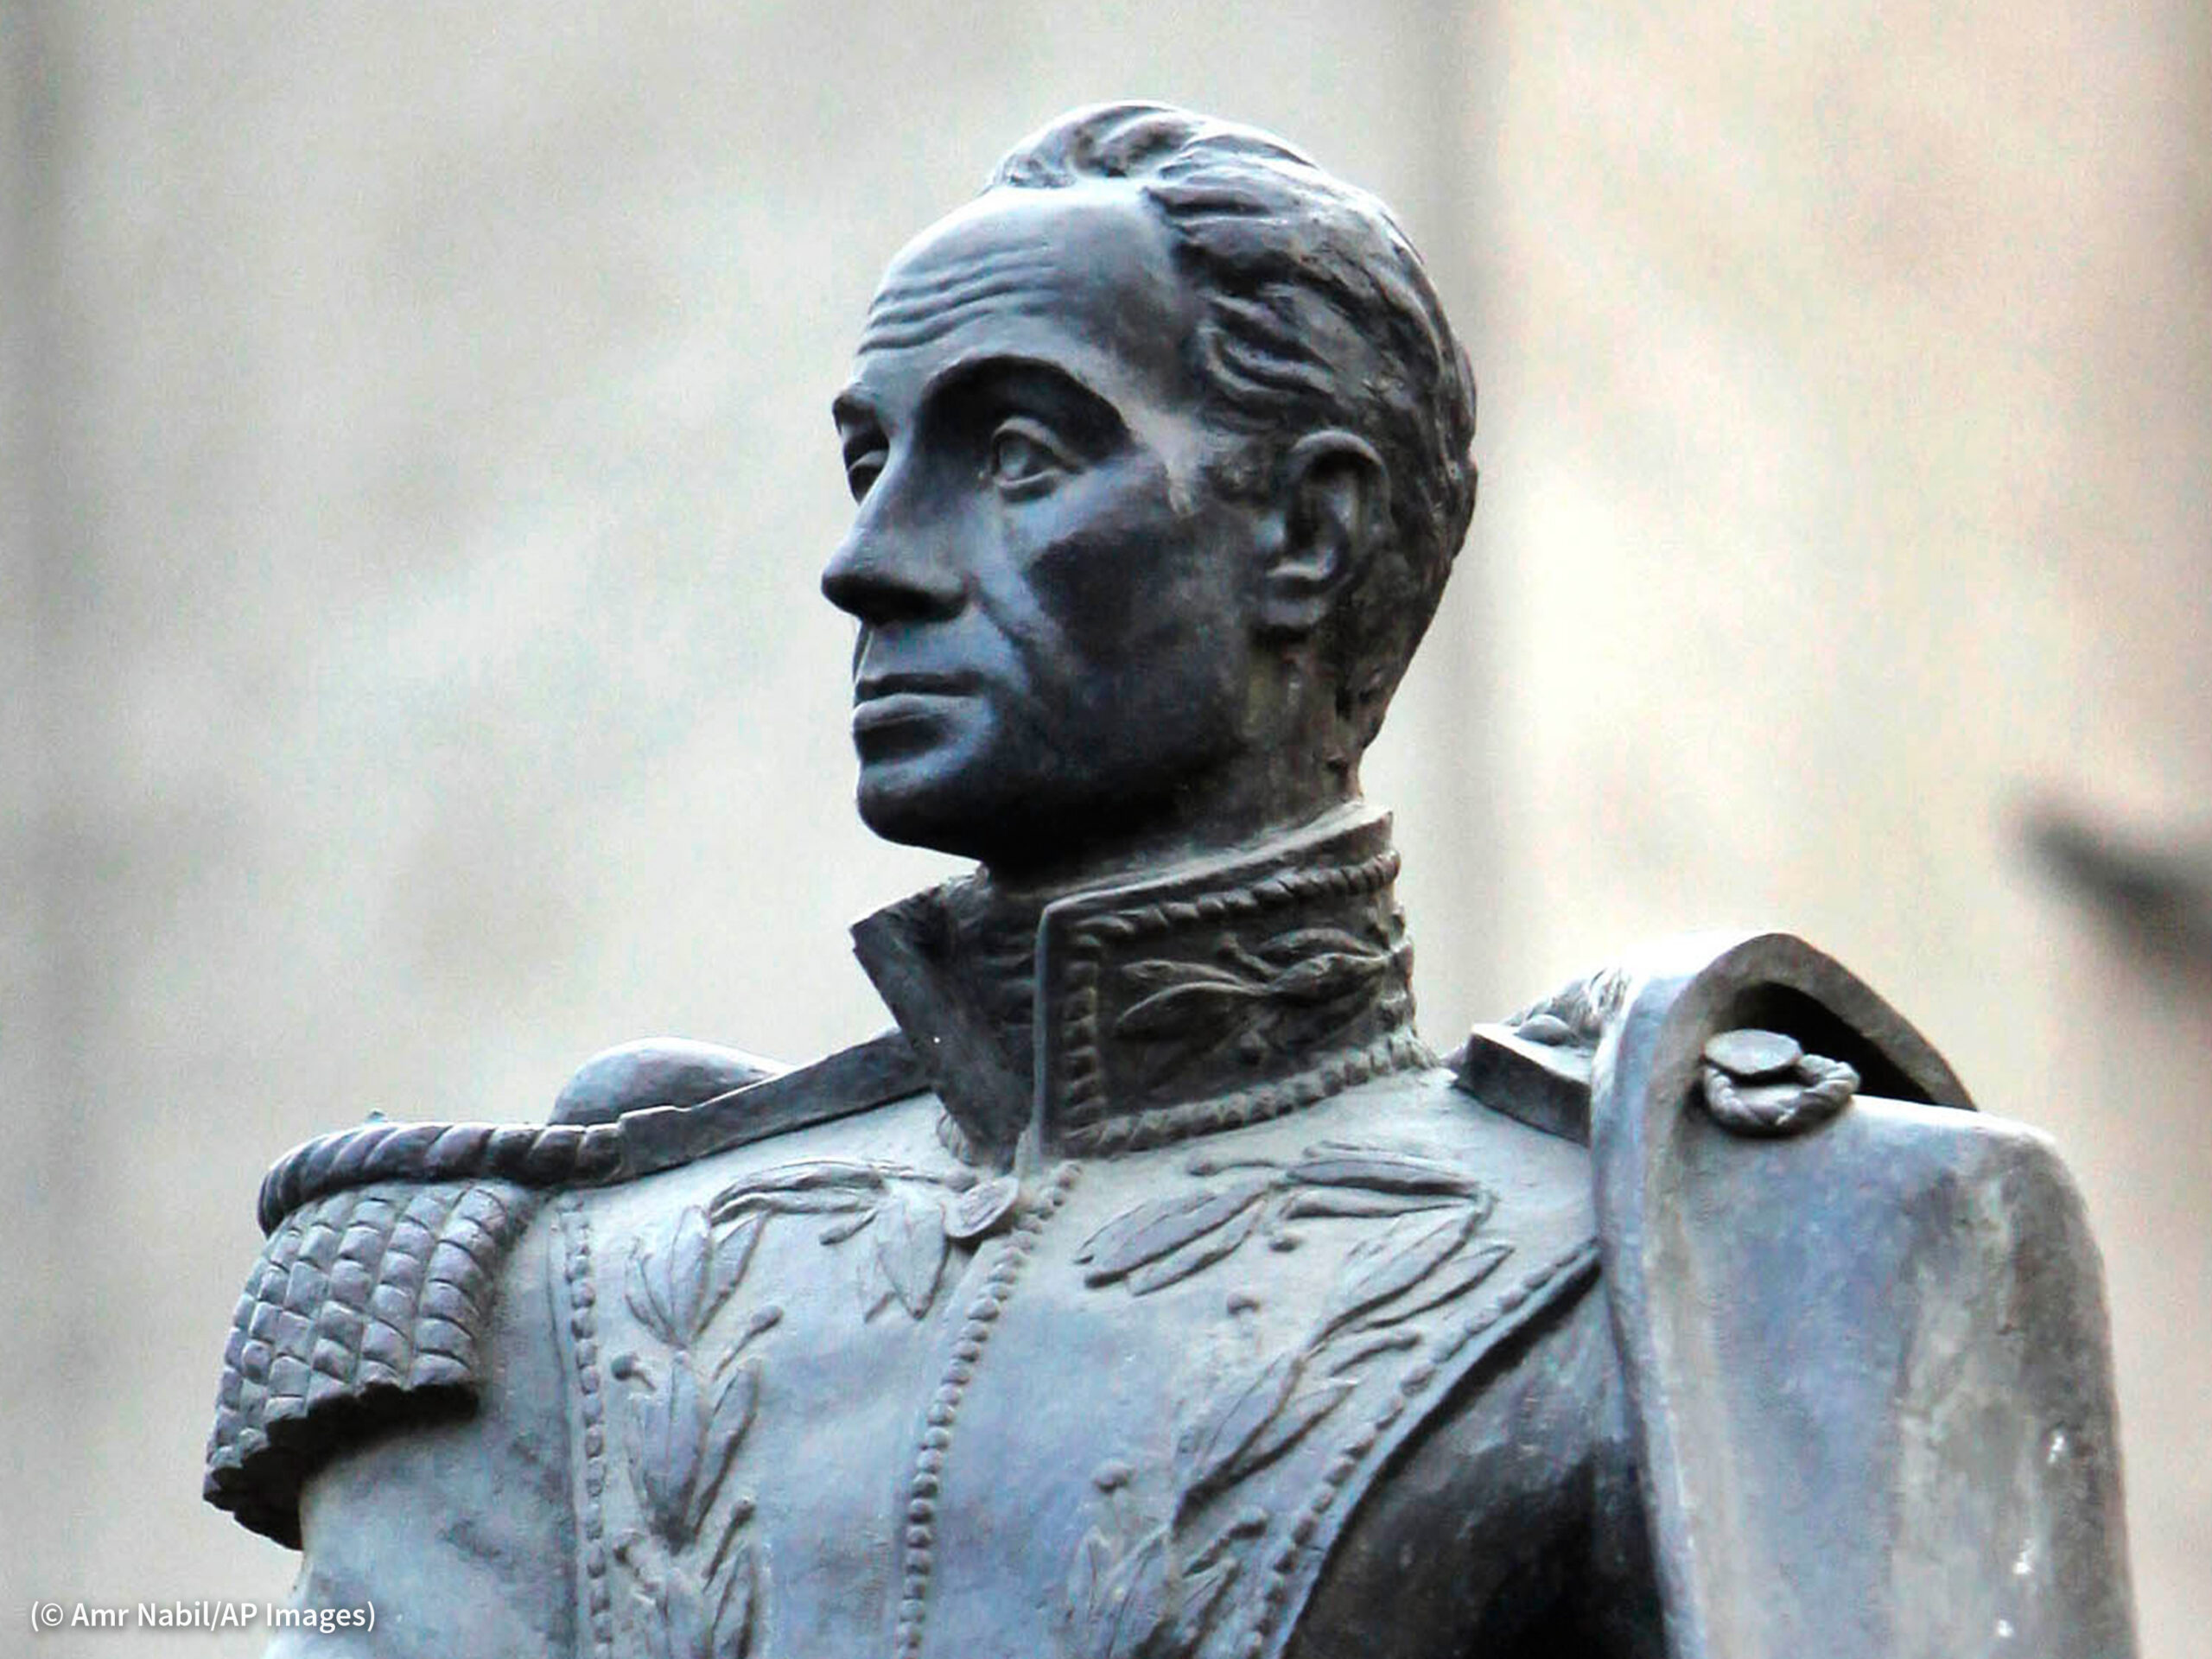 How did Simón Bolívar become El Libertador?